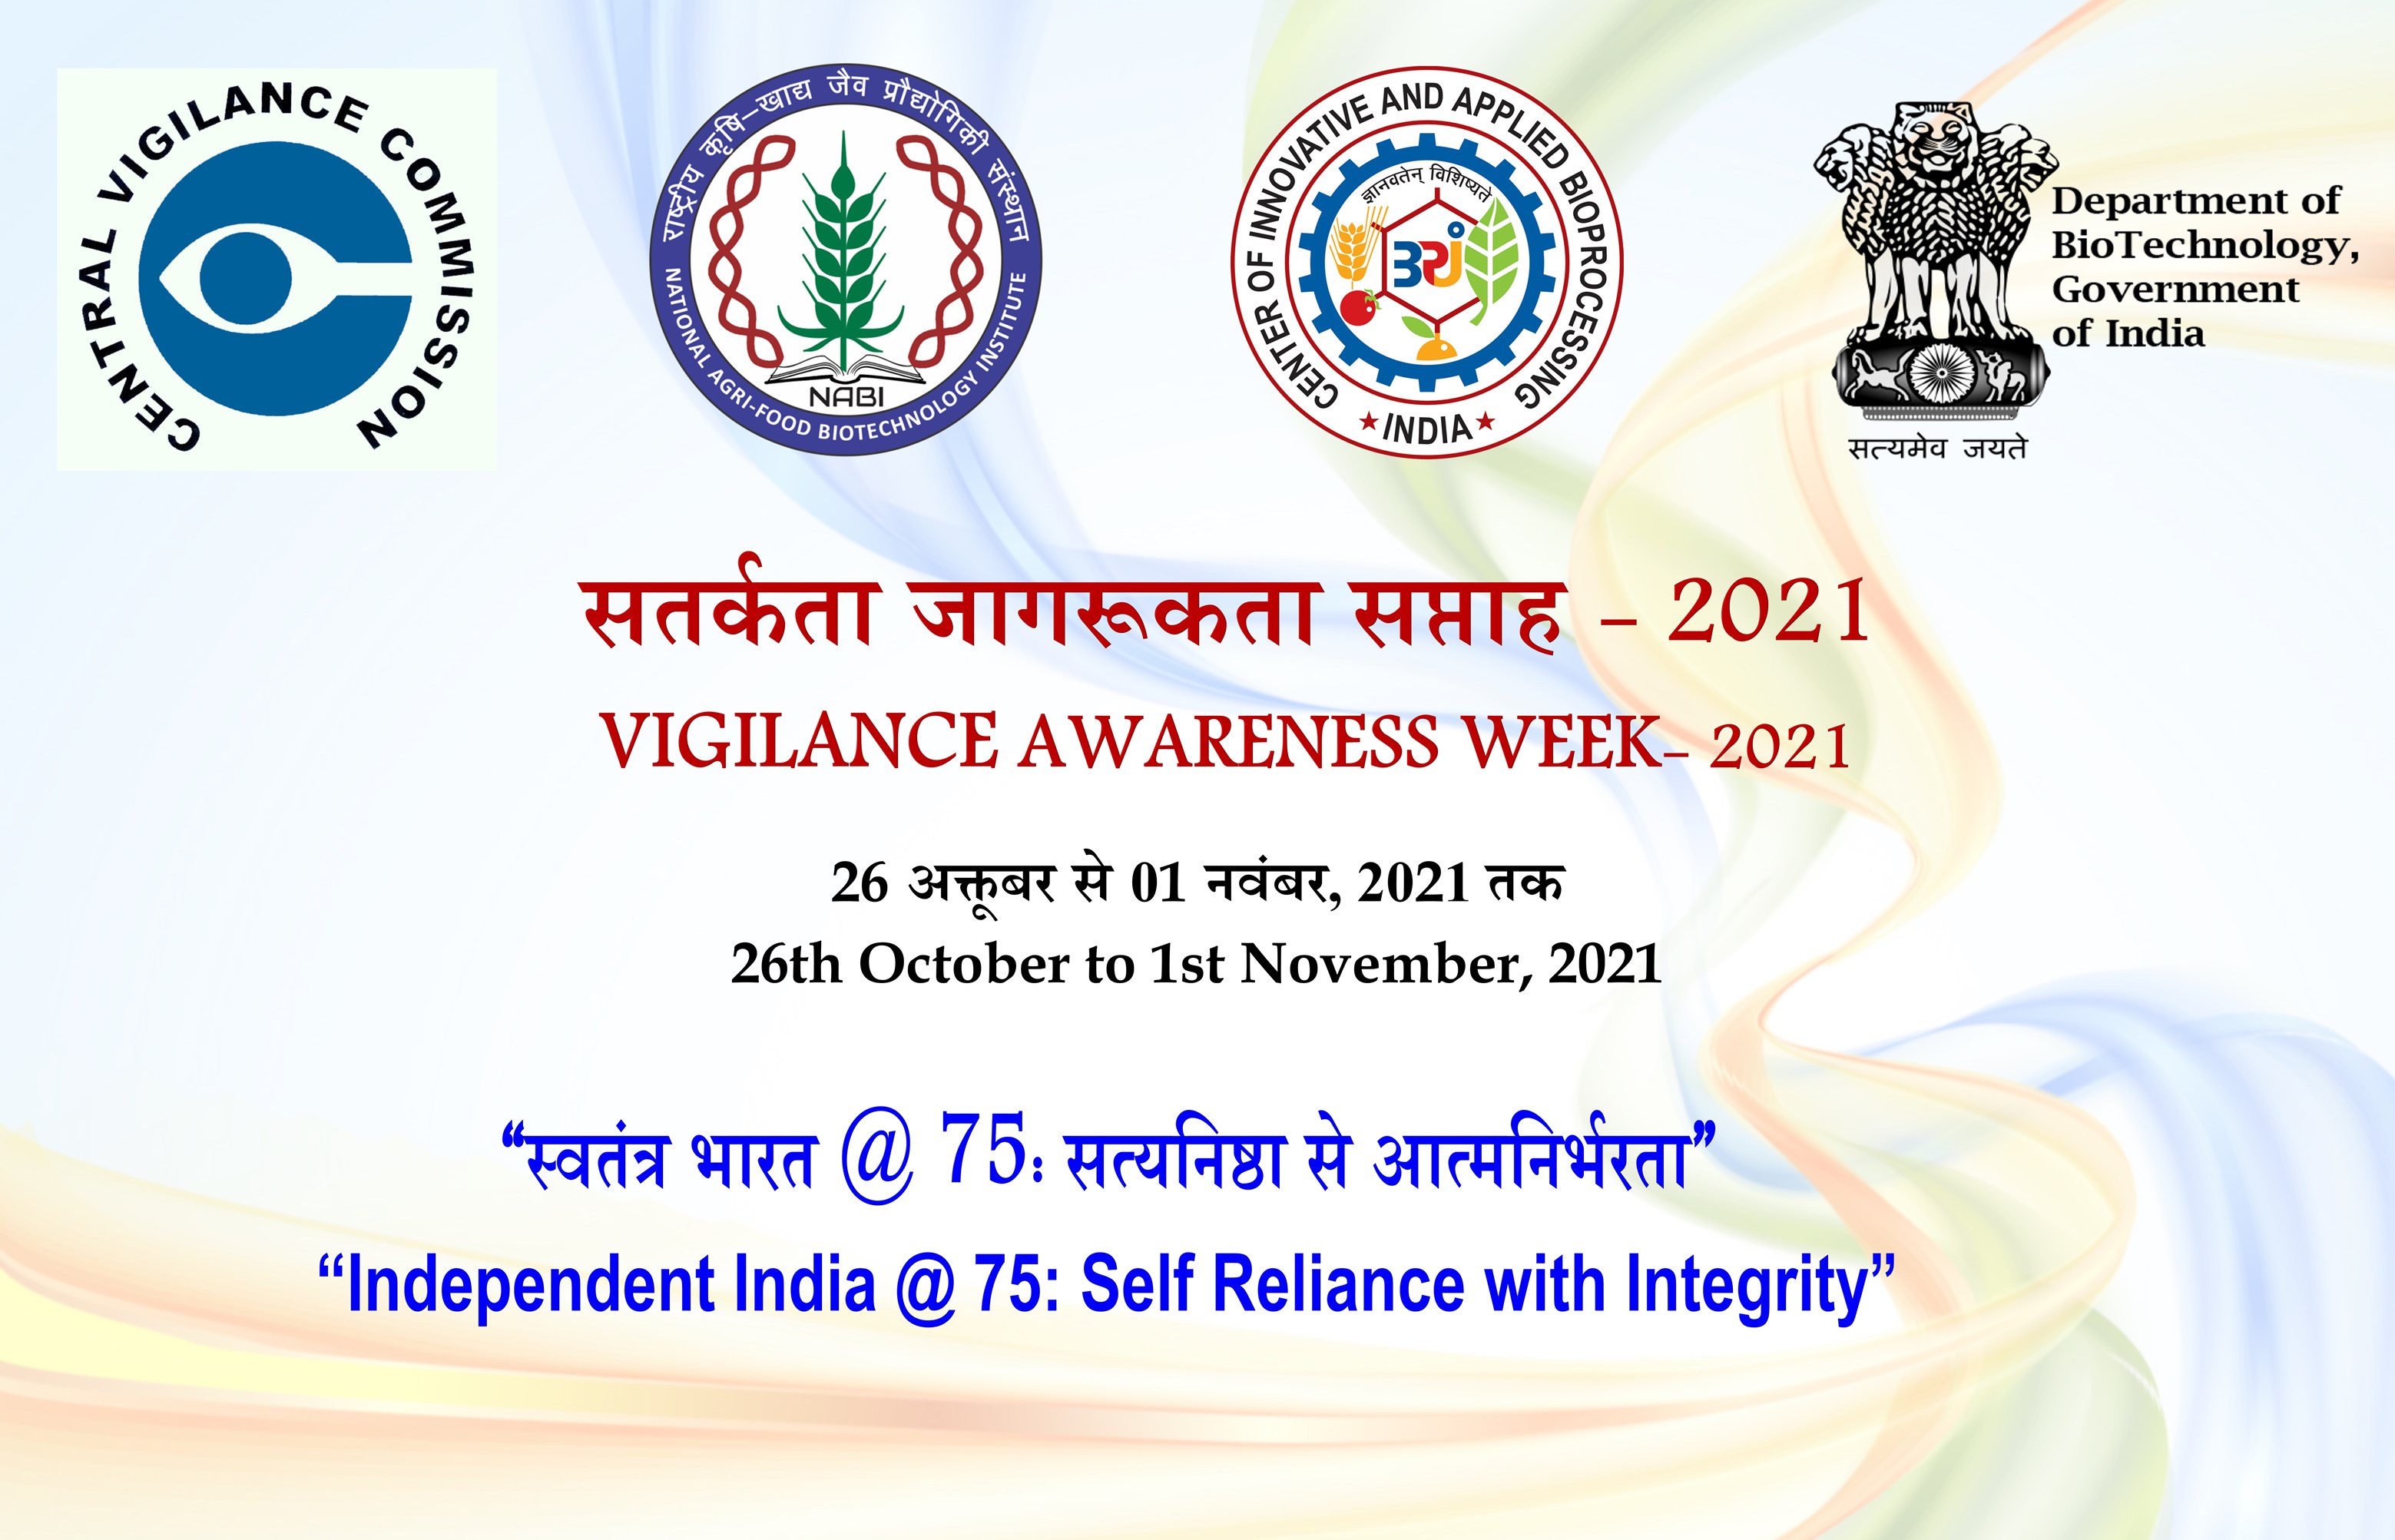 Vigilance Awareness Week-2021